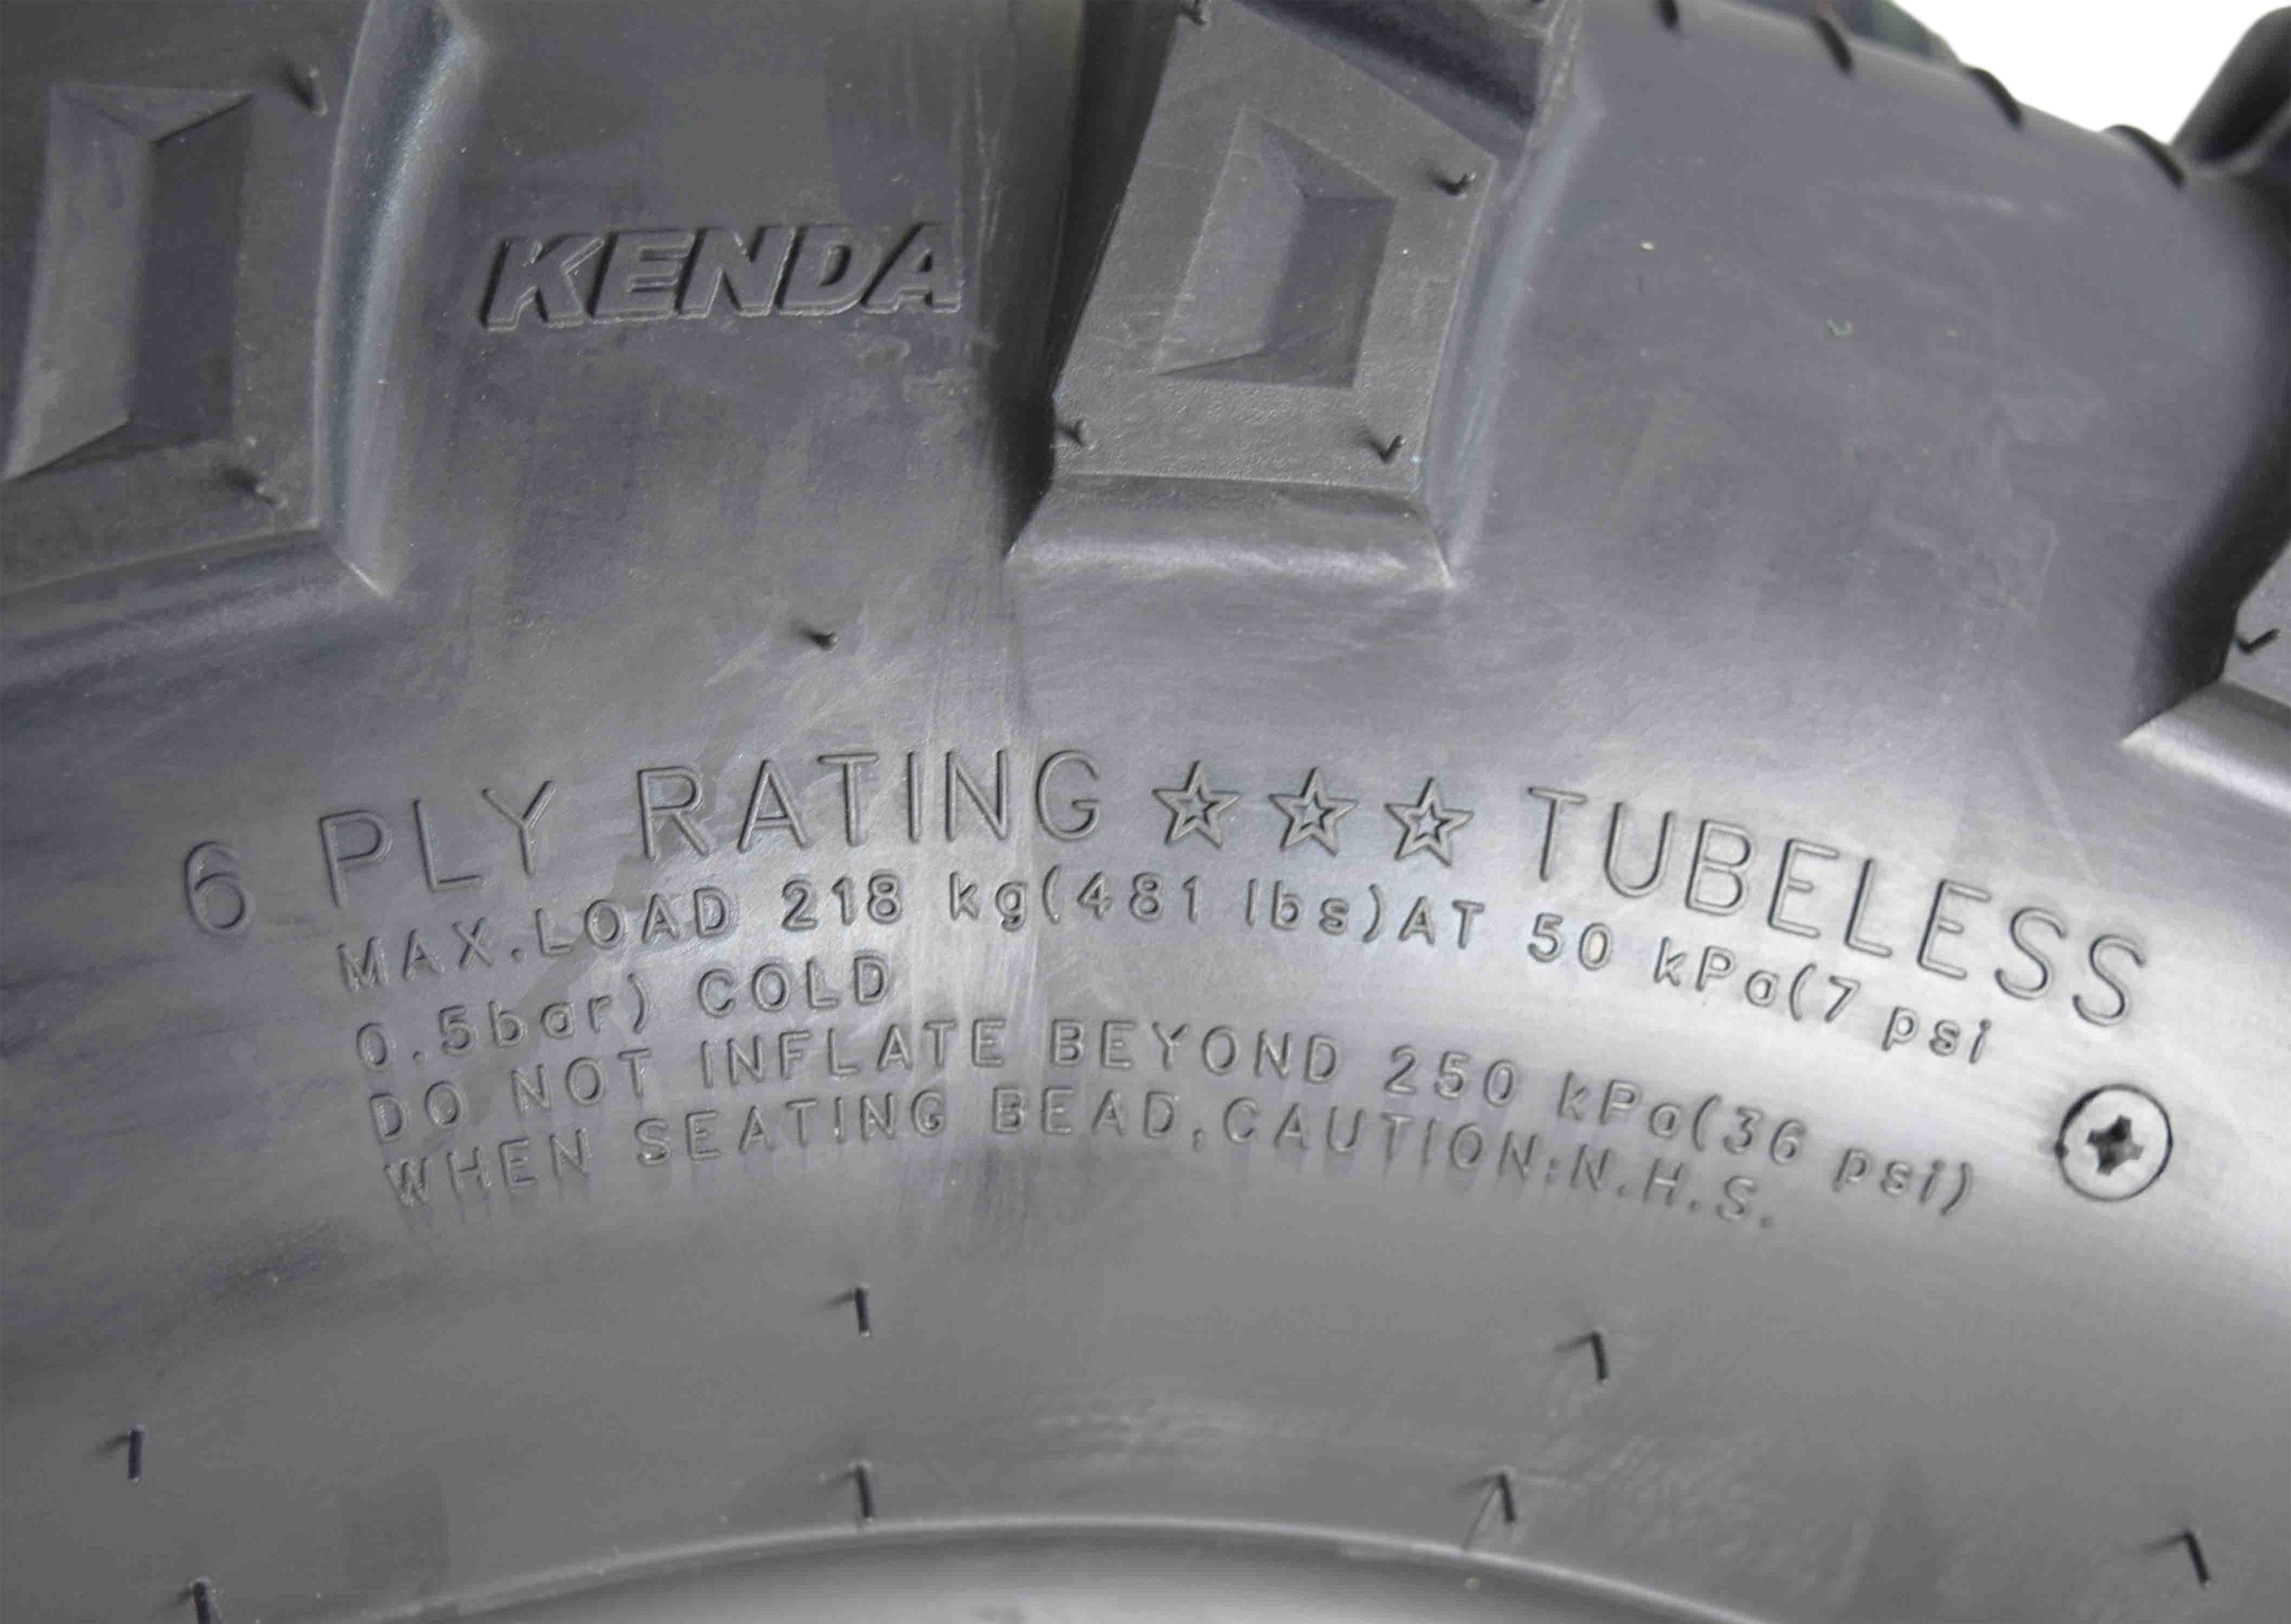 Kenda Bear Claw EVO  26x11-12 Rear ATV/UTV Tires 2 Pack with Bottle Opener Keychain